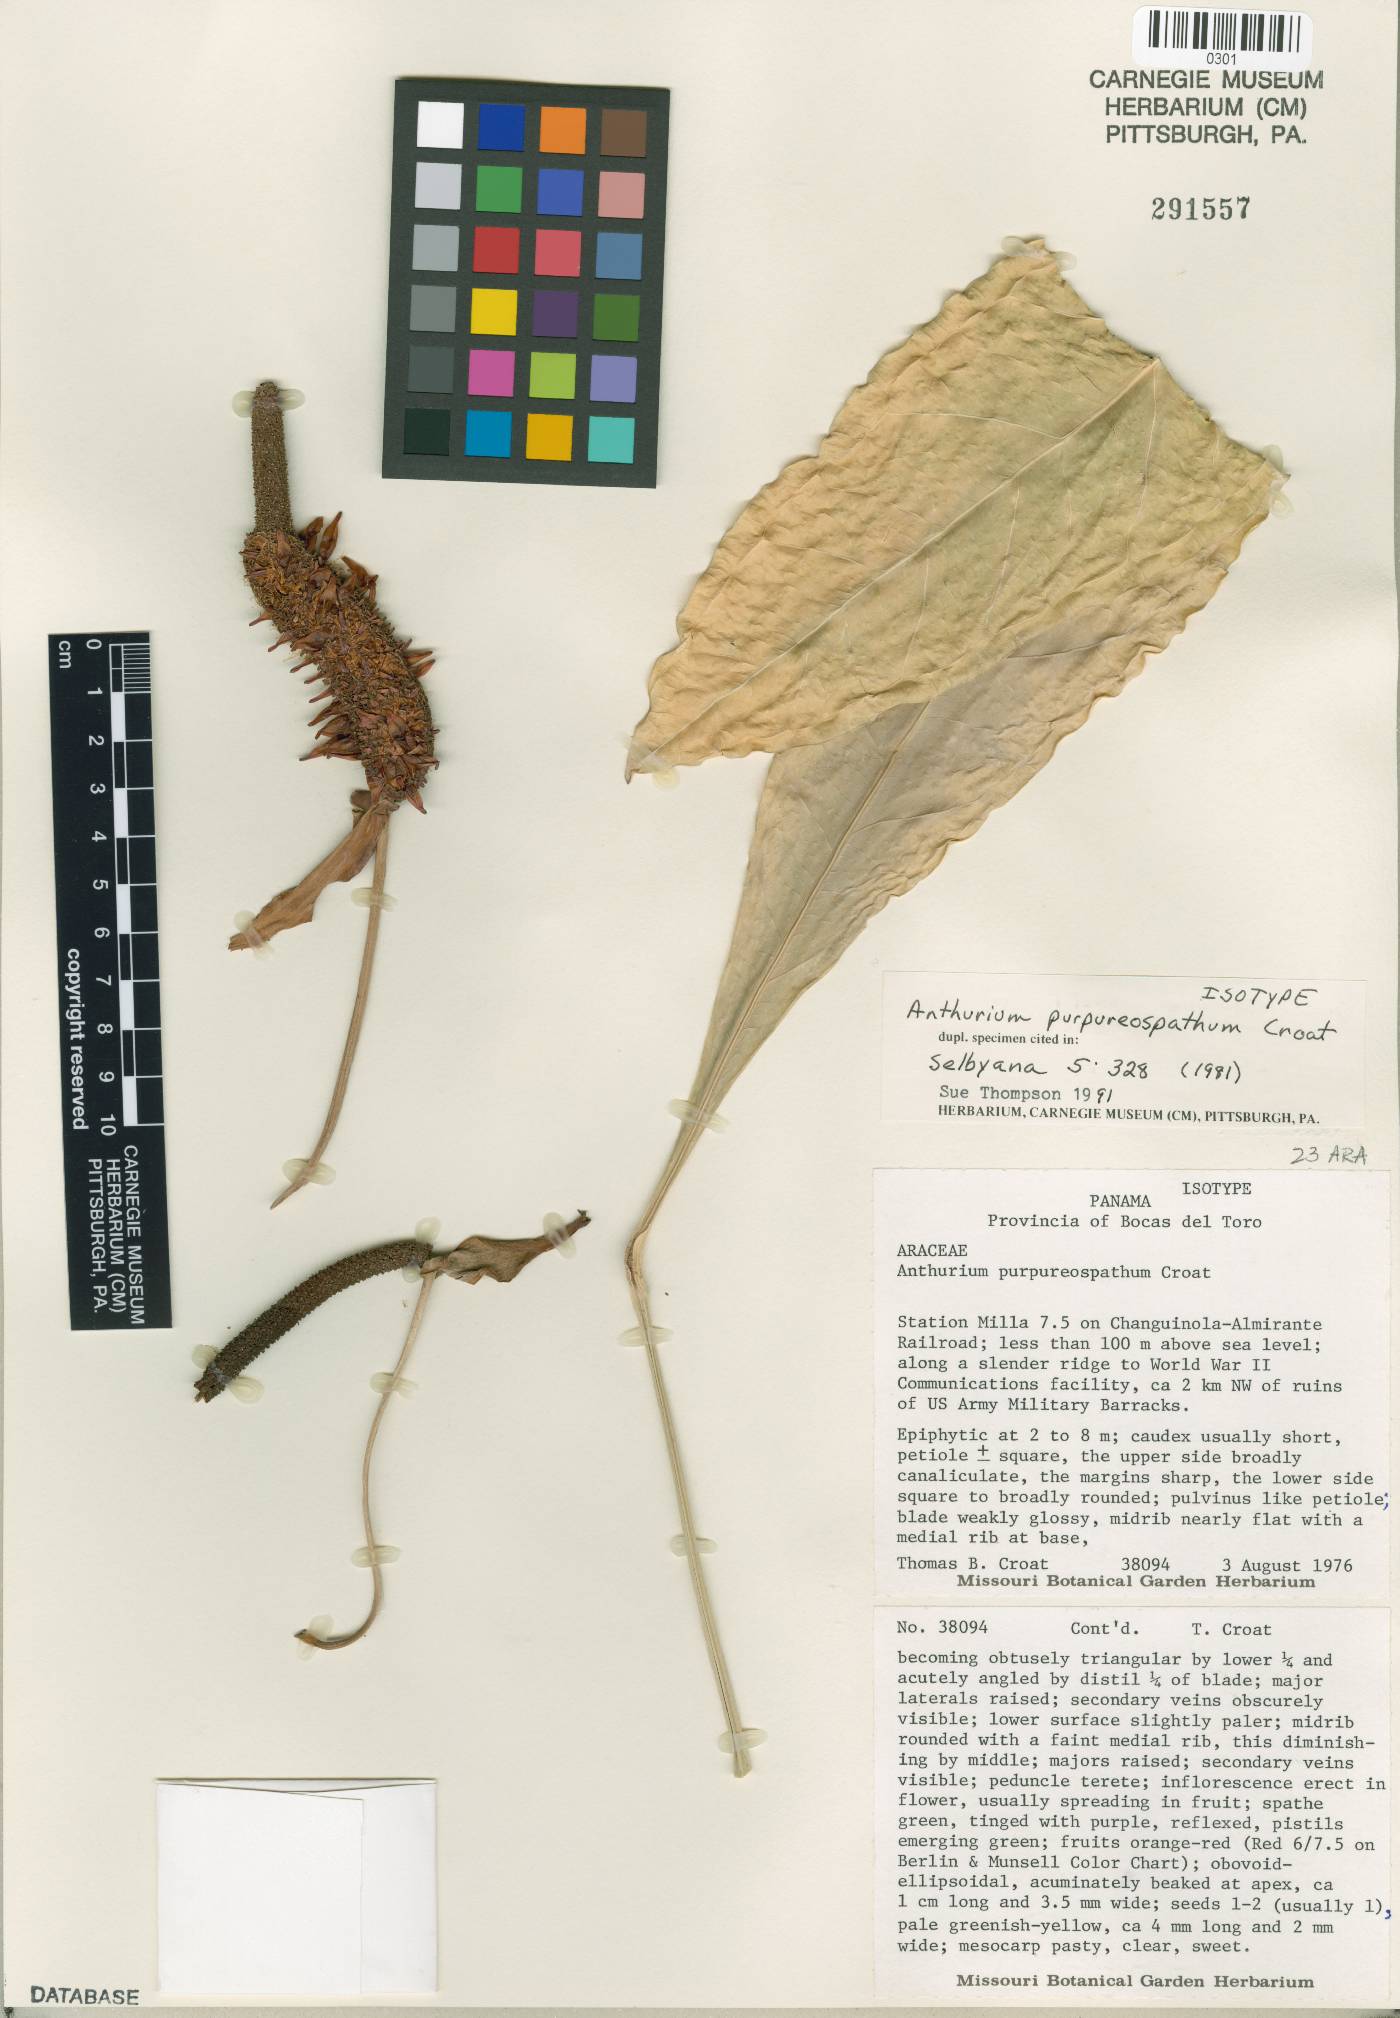 Anthurium purpureospathum image